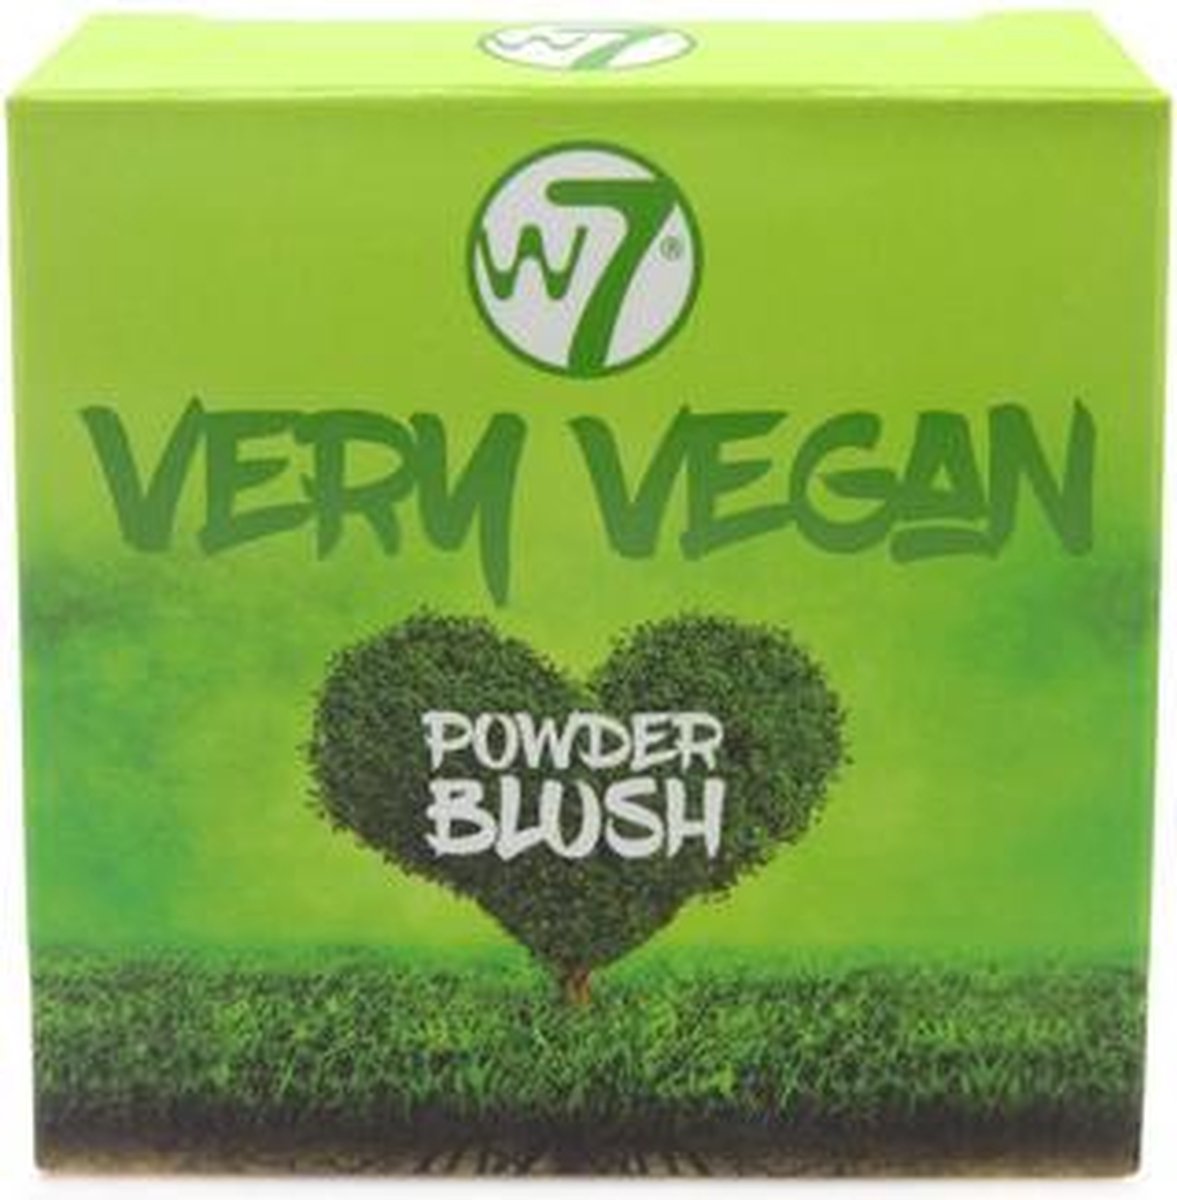 W7 Very Vegan Powder Blusher Maple Mist